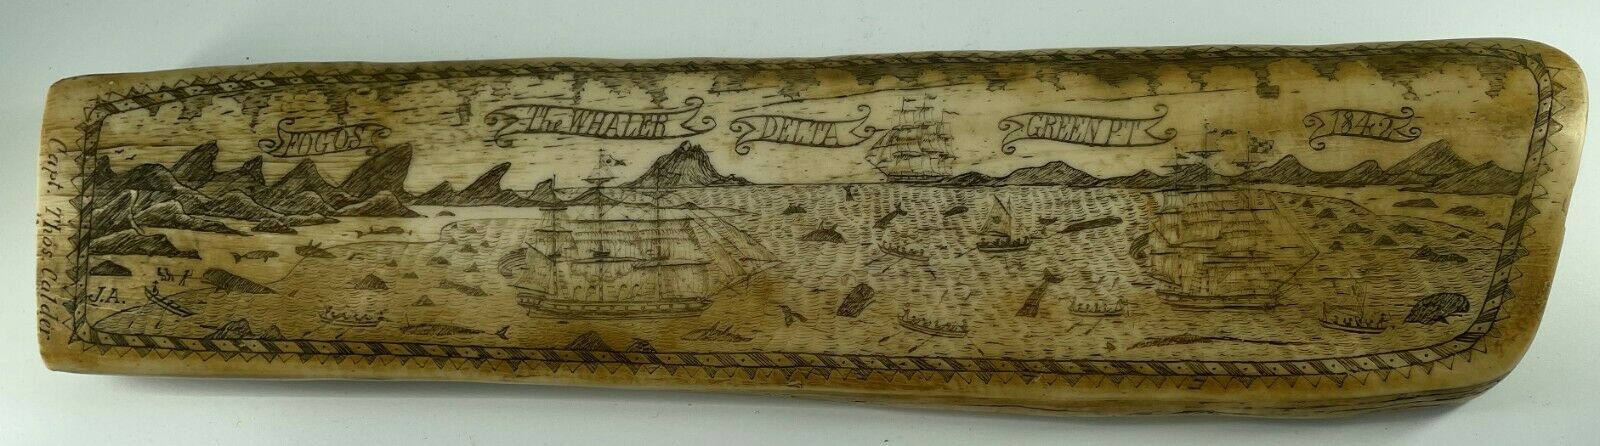 1842 Joseph Boyle Capt. Fogos, Whaler, Delta Green Pt, Replica Scrimshaw 17"